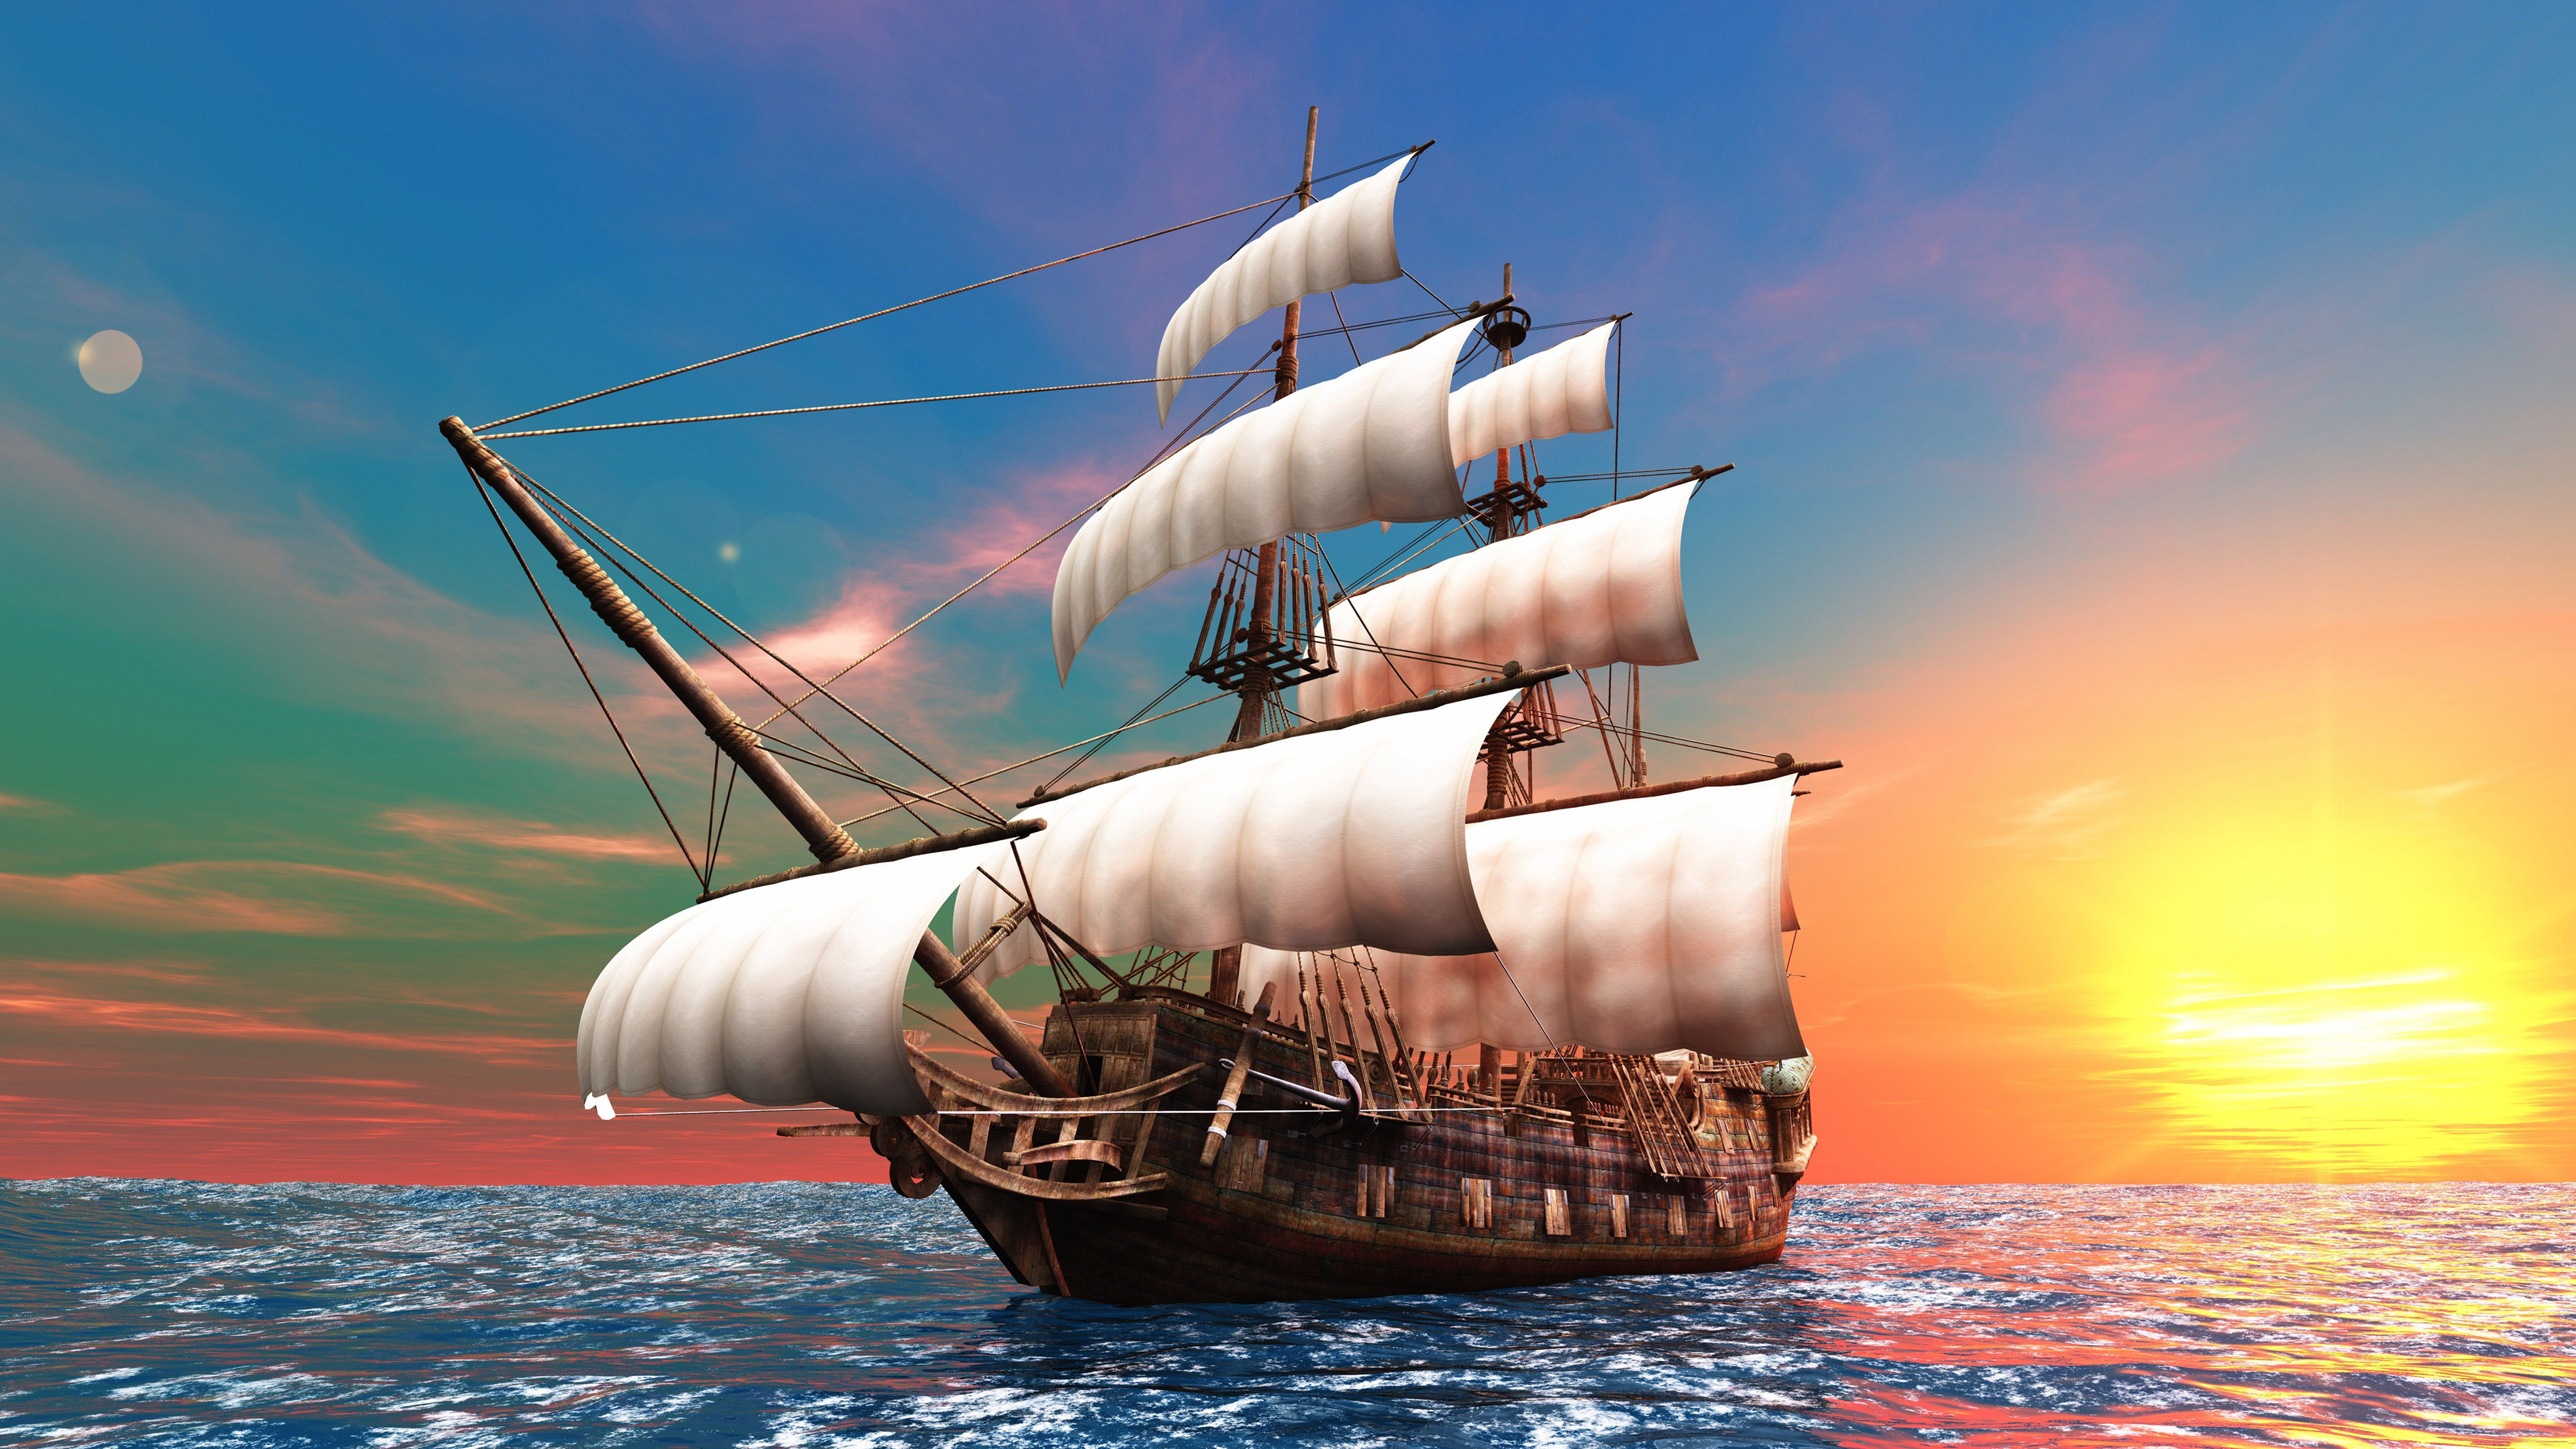 Ship White sails Sea Sunsets Red Sky Horizon Beautiful Wallpaper HD